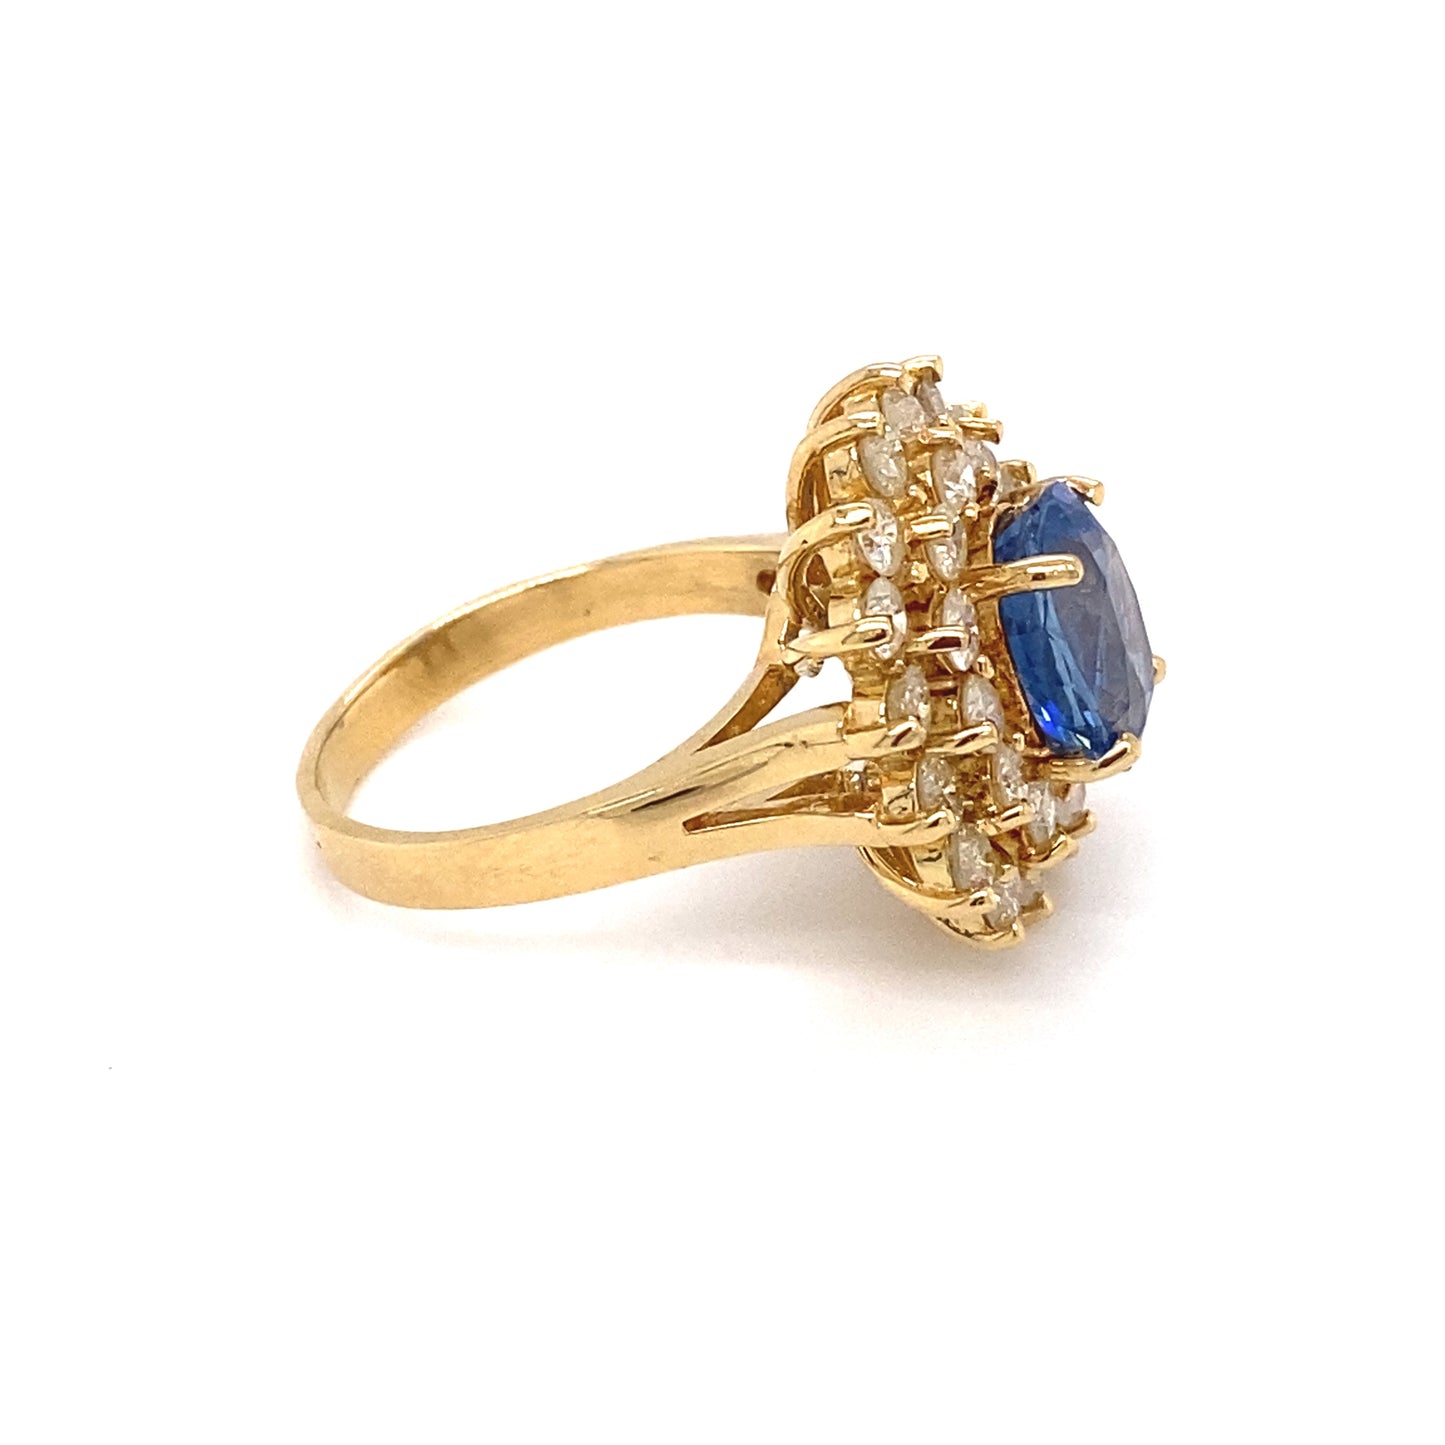 2.5 Carat Ceylon Sapphire and Diamond Double Halo Ring